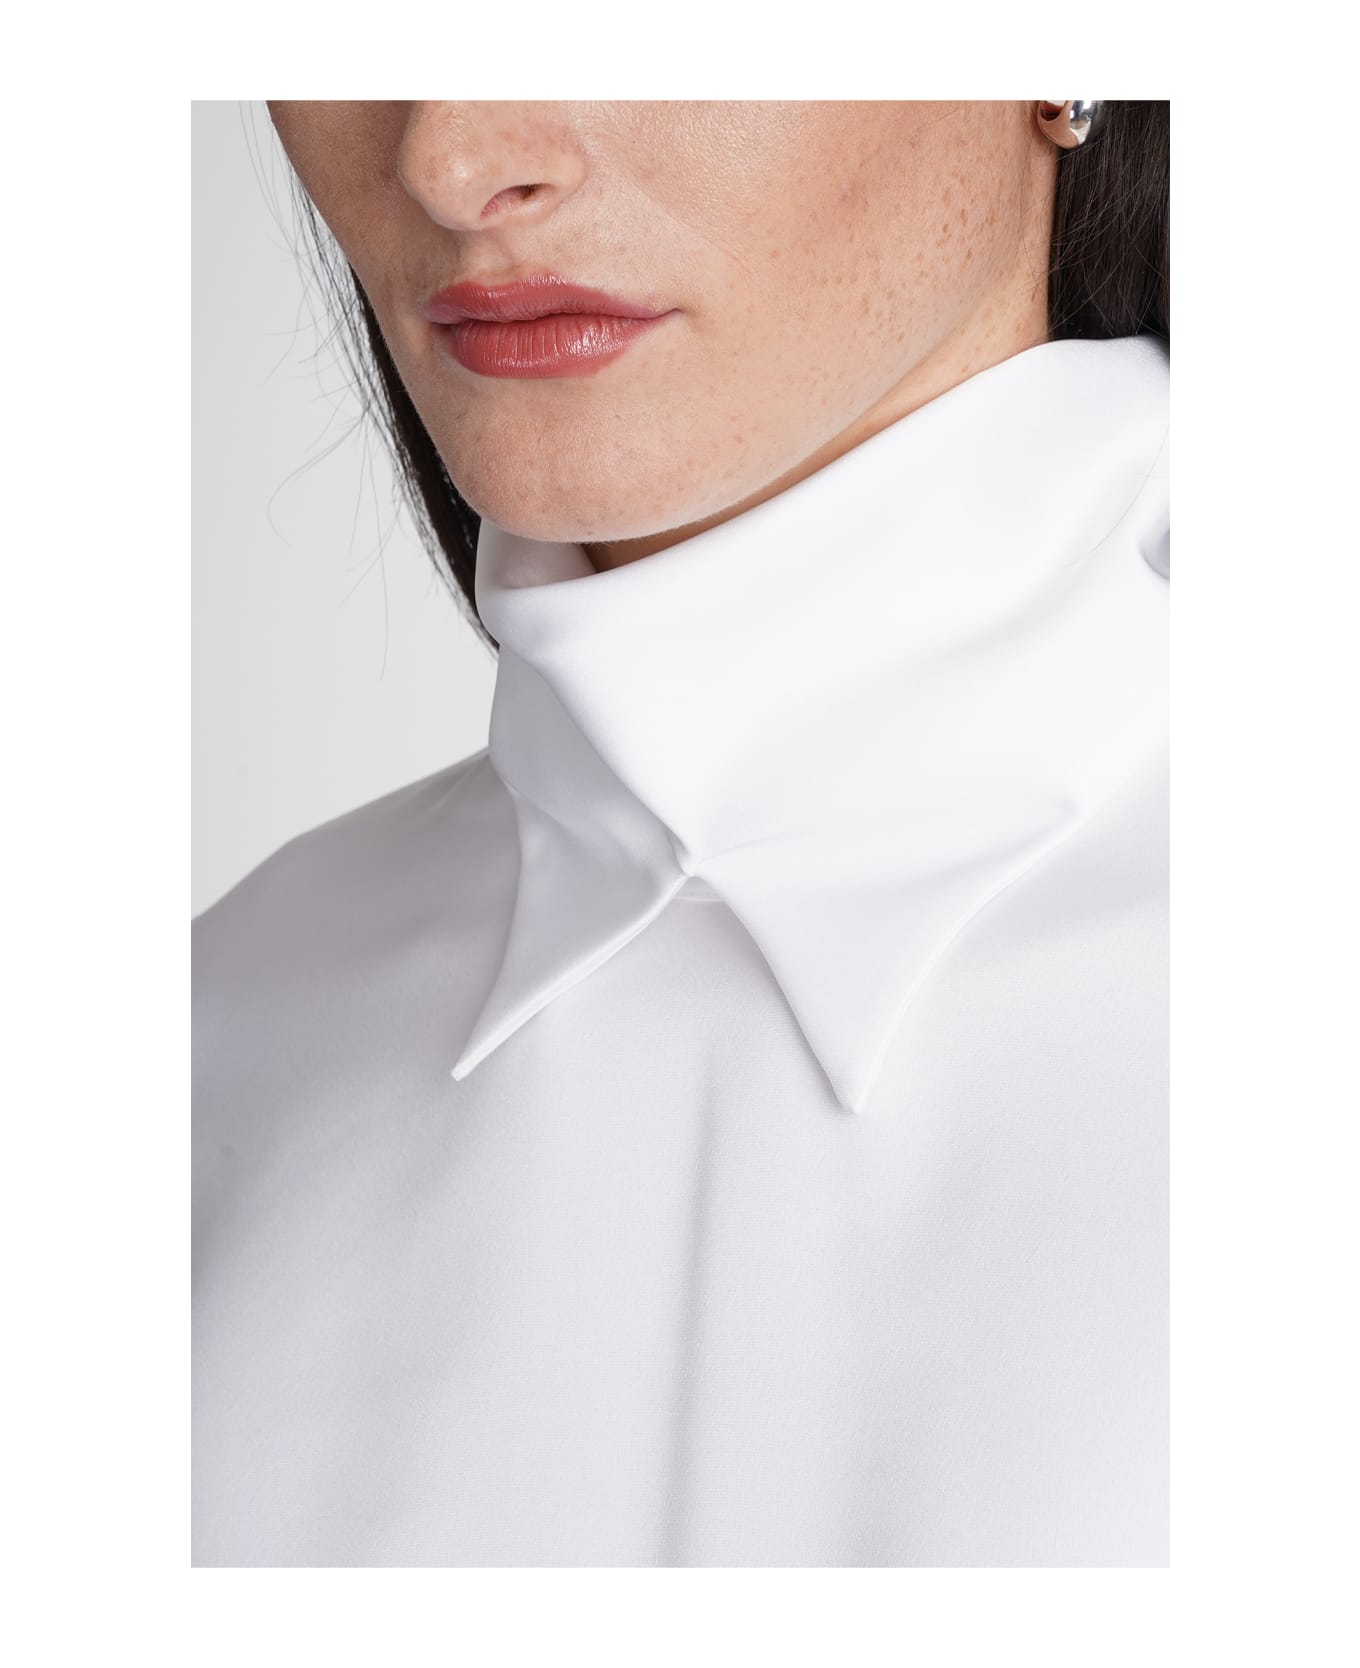 Emporio Armani Blouse In White Polyester Giorgio Armani - Silk White